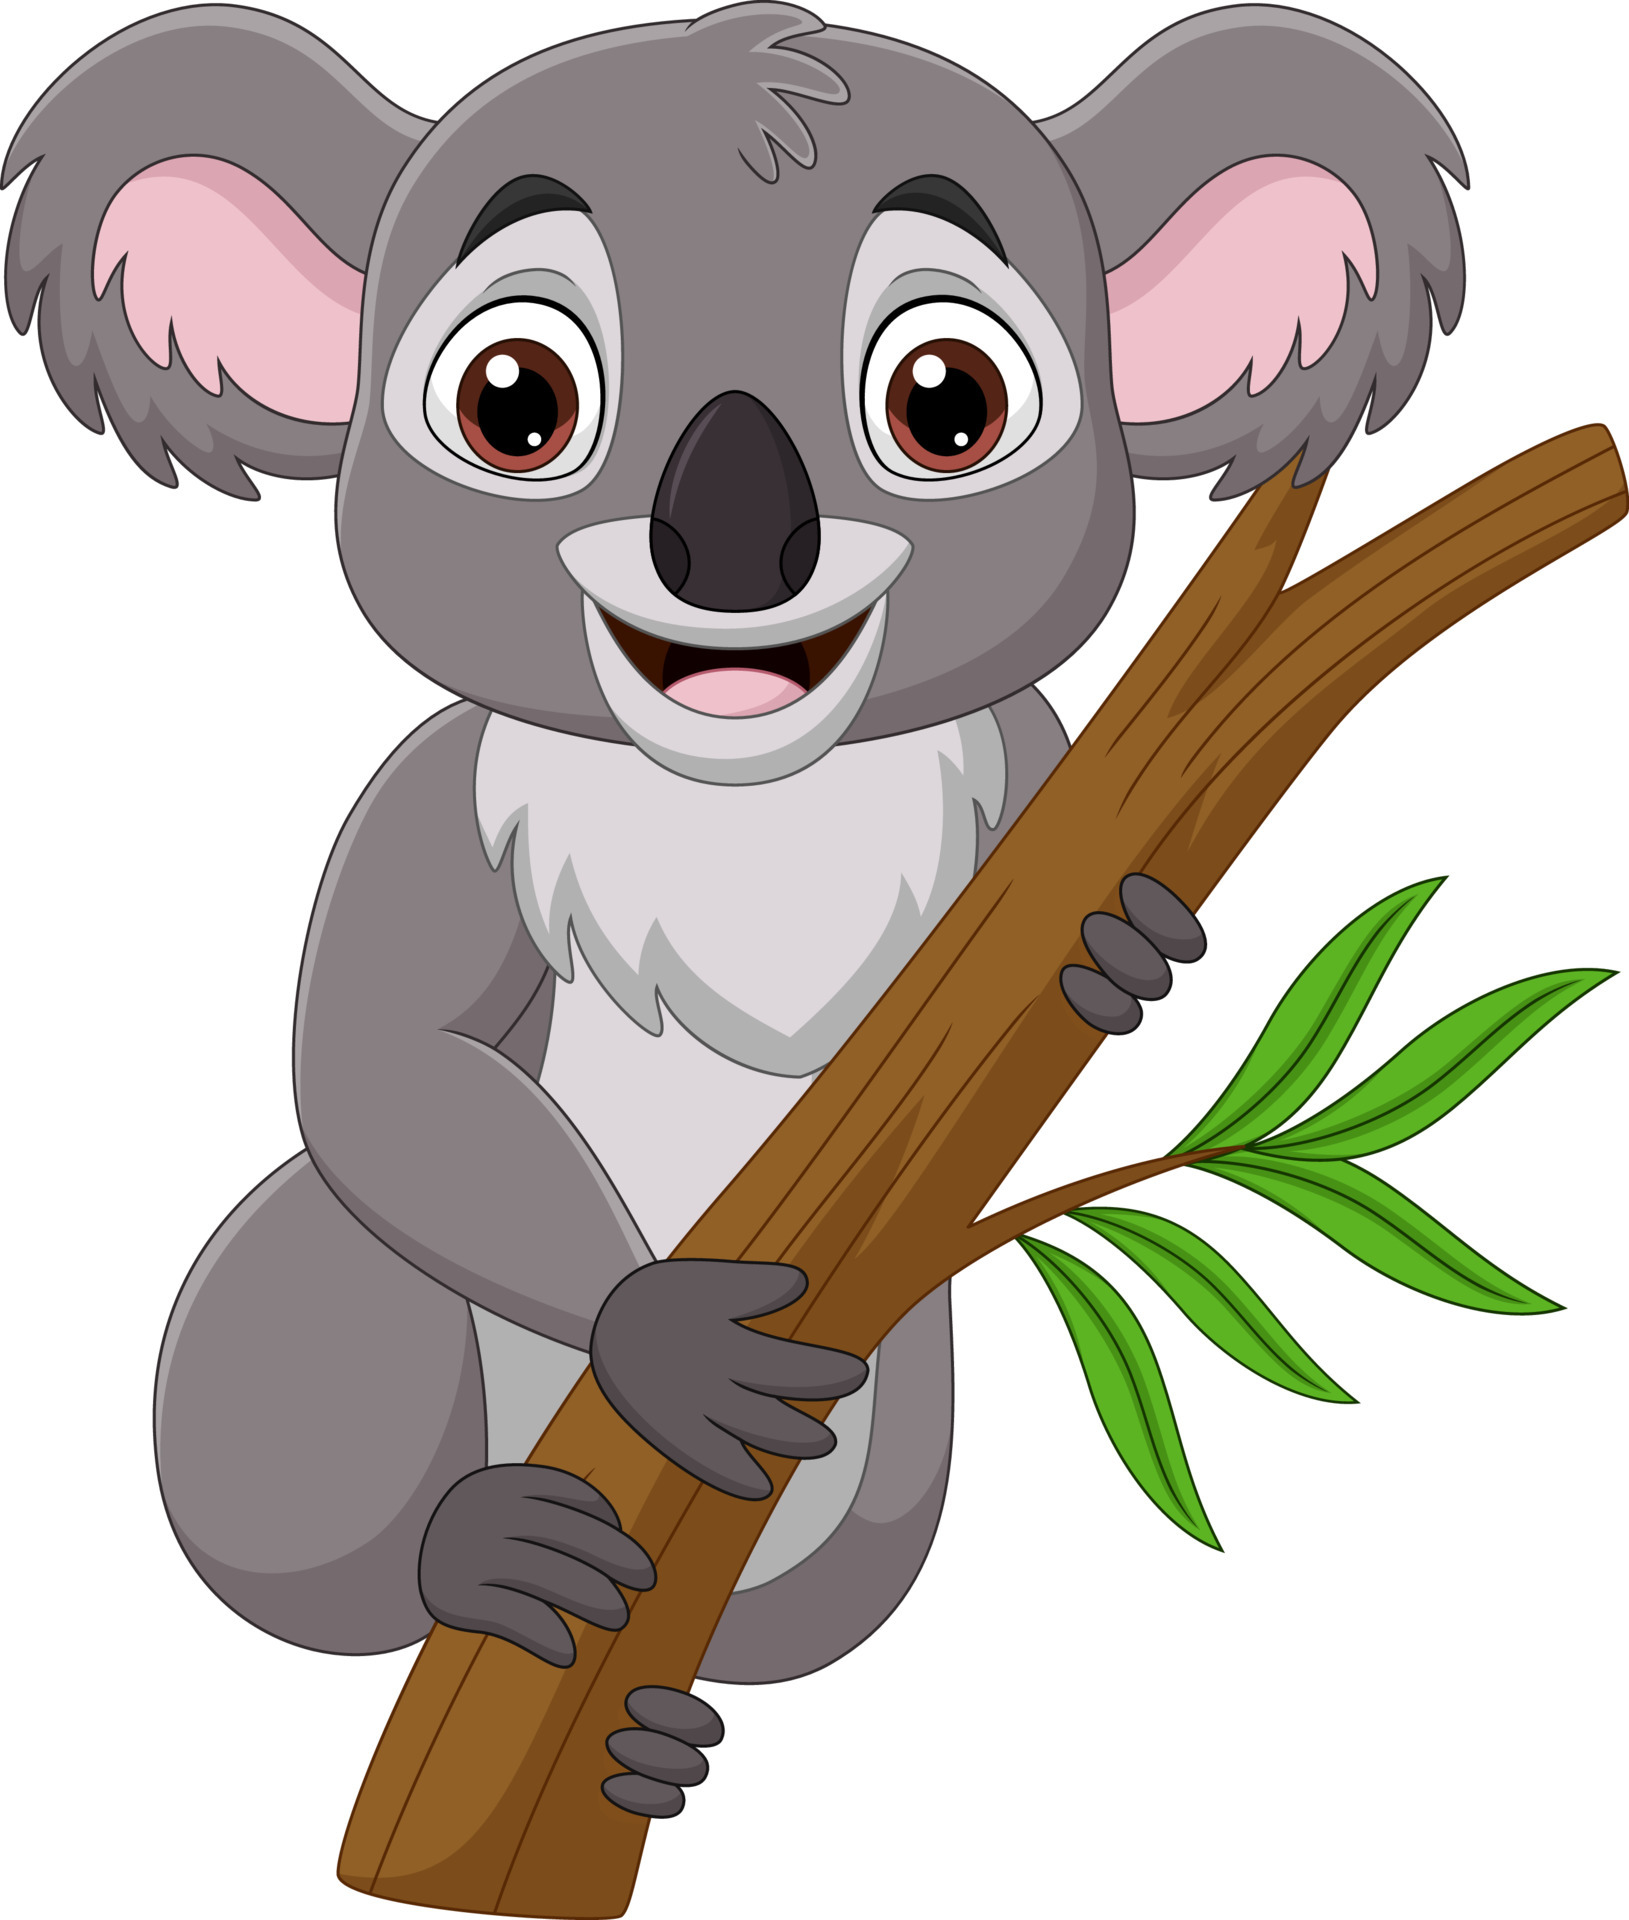 koala de dibujos animados en una rama de árbol 6605486 Vector en Vecteezy